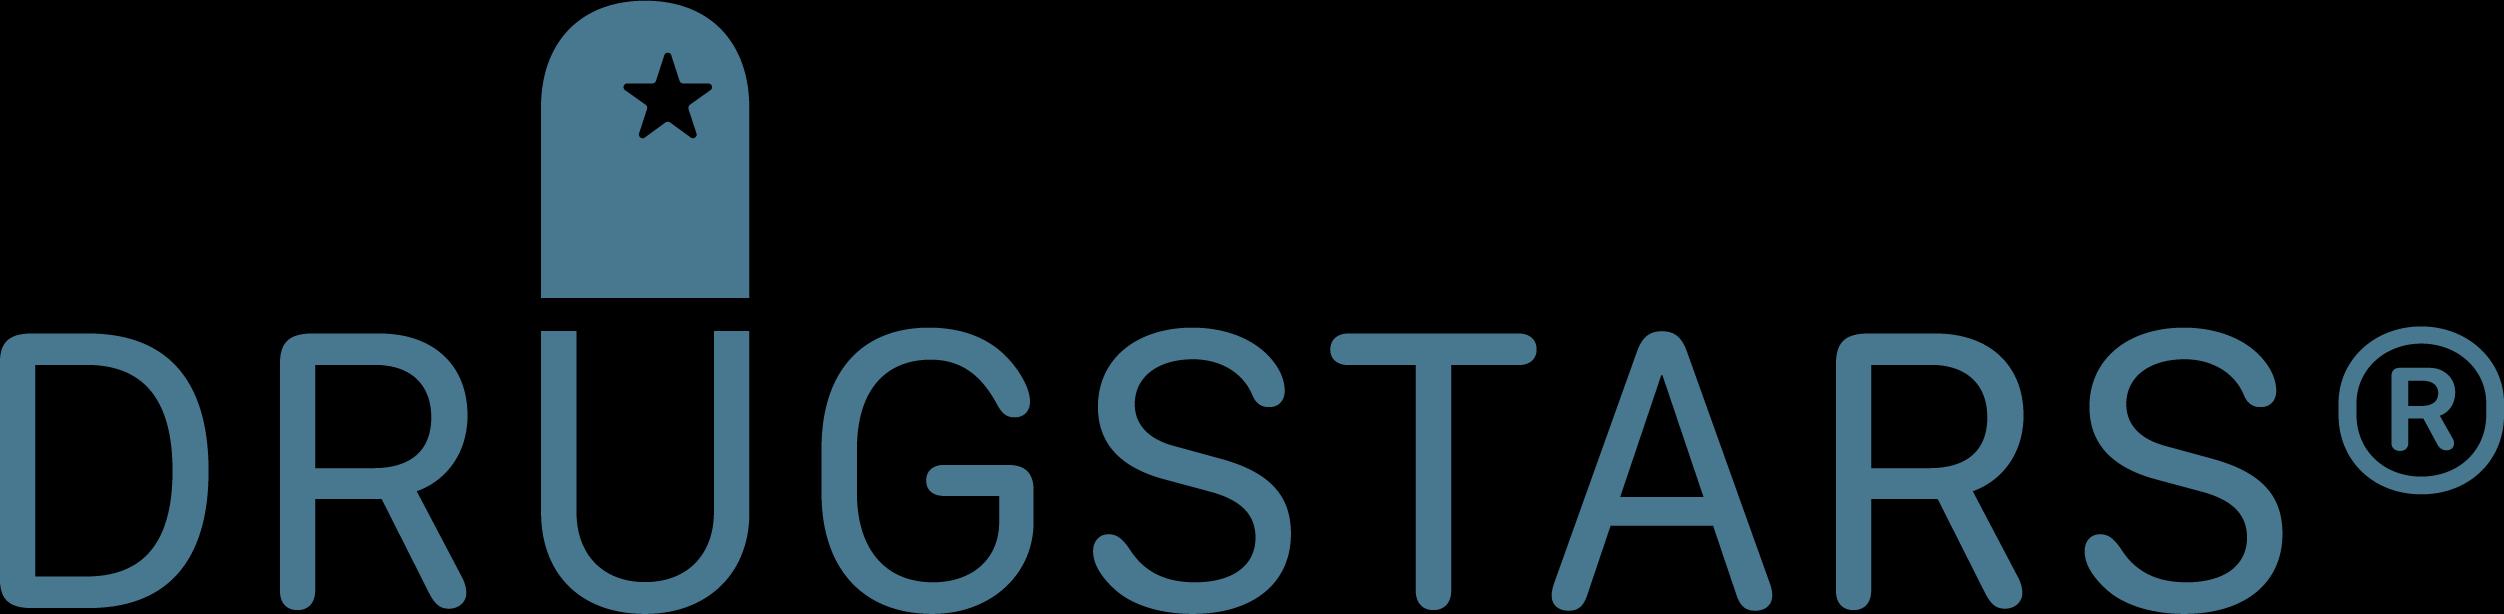 DrugStars_logo